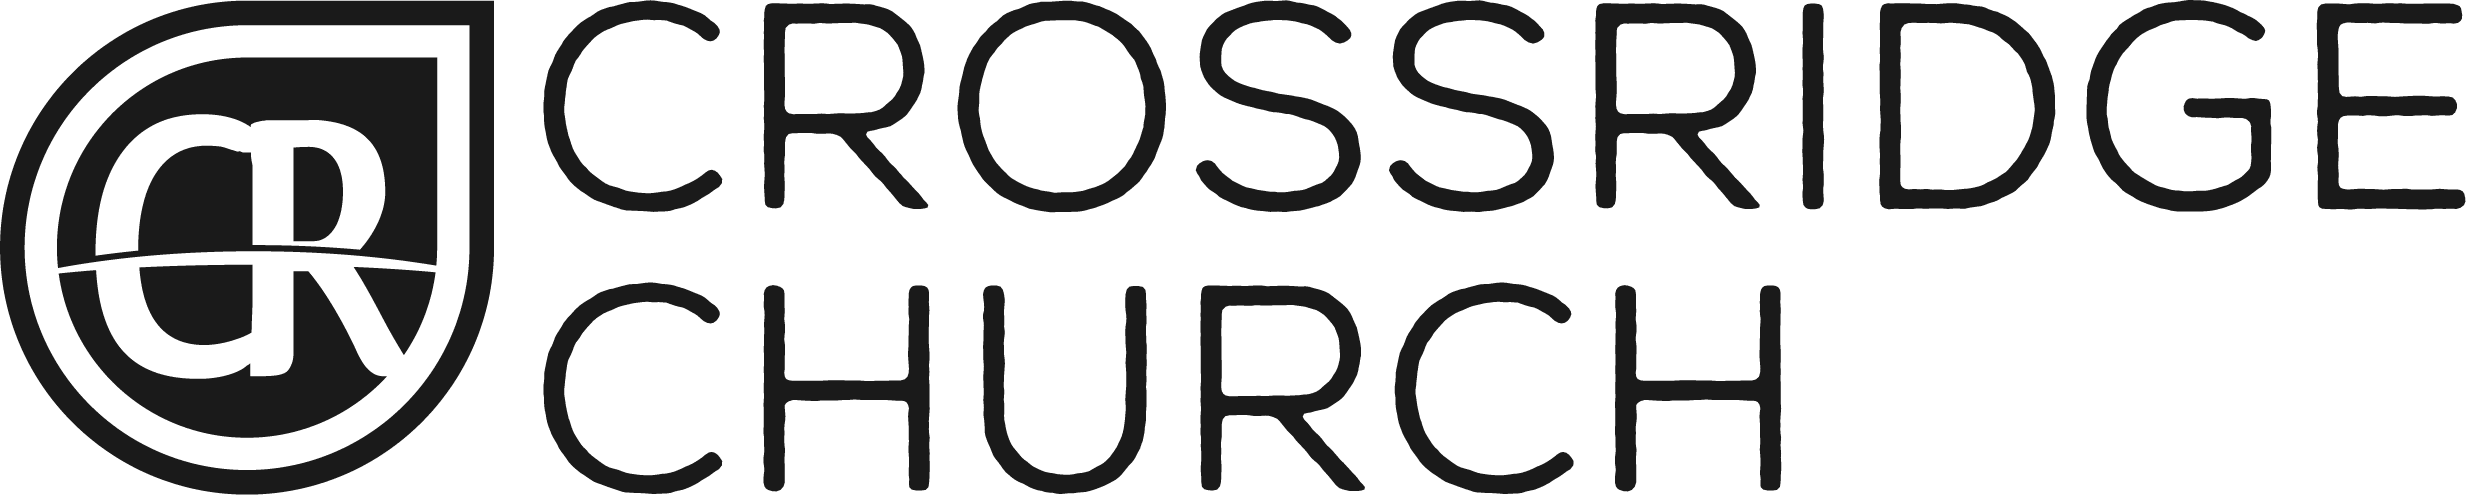 Crossridge Church logo